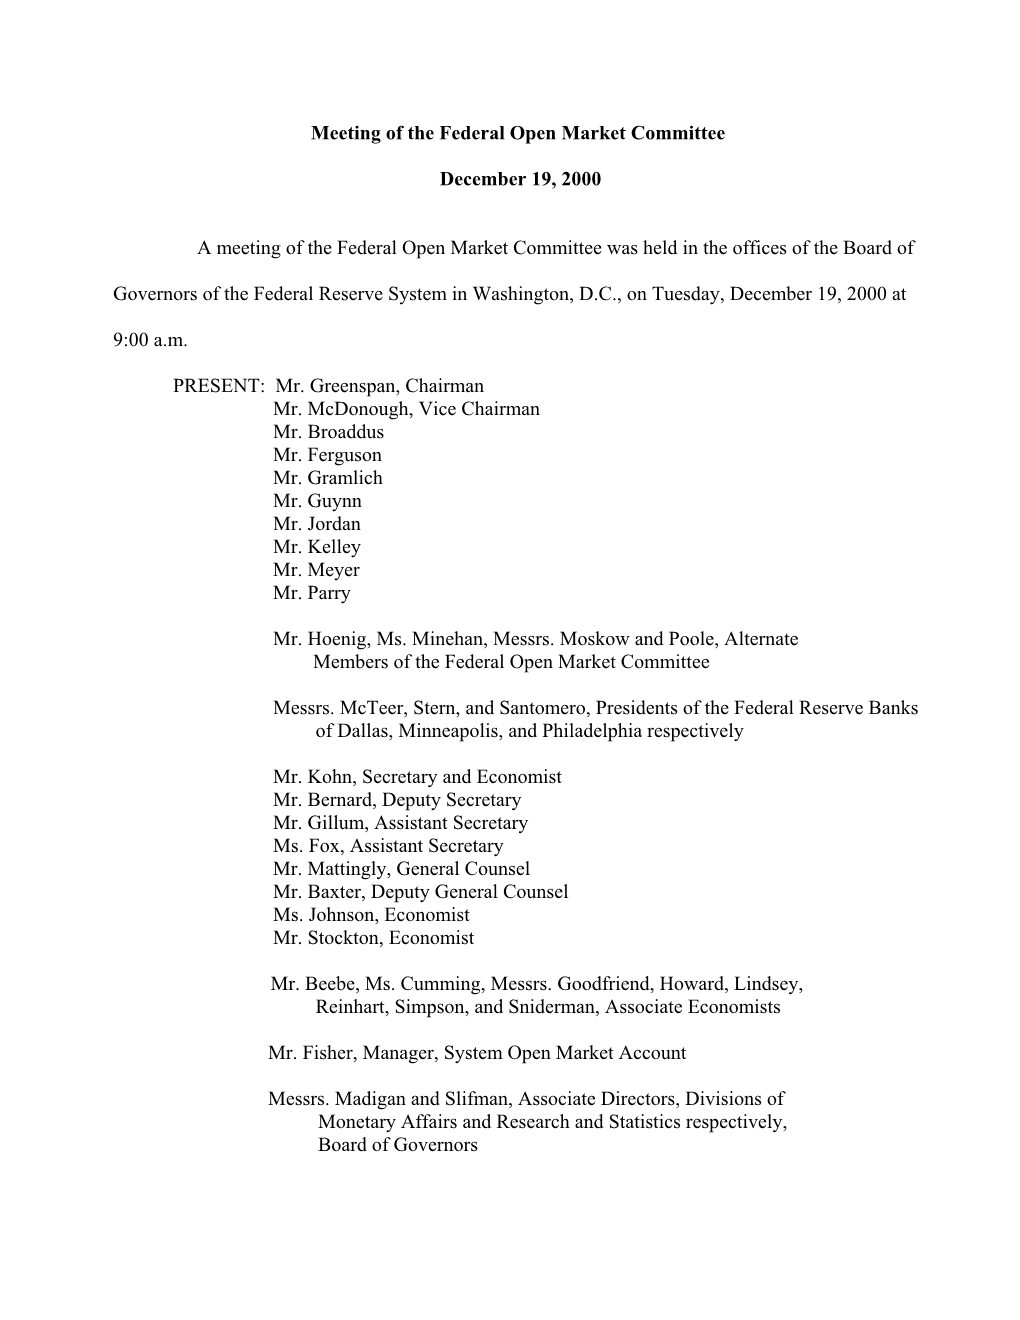 Transcript of Federal Open Market Committee Meeting of December 19, 2000